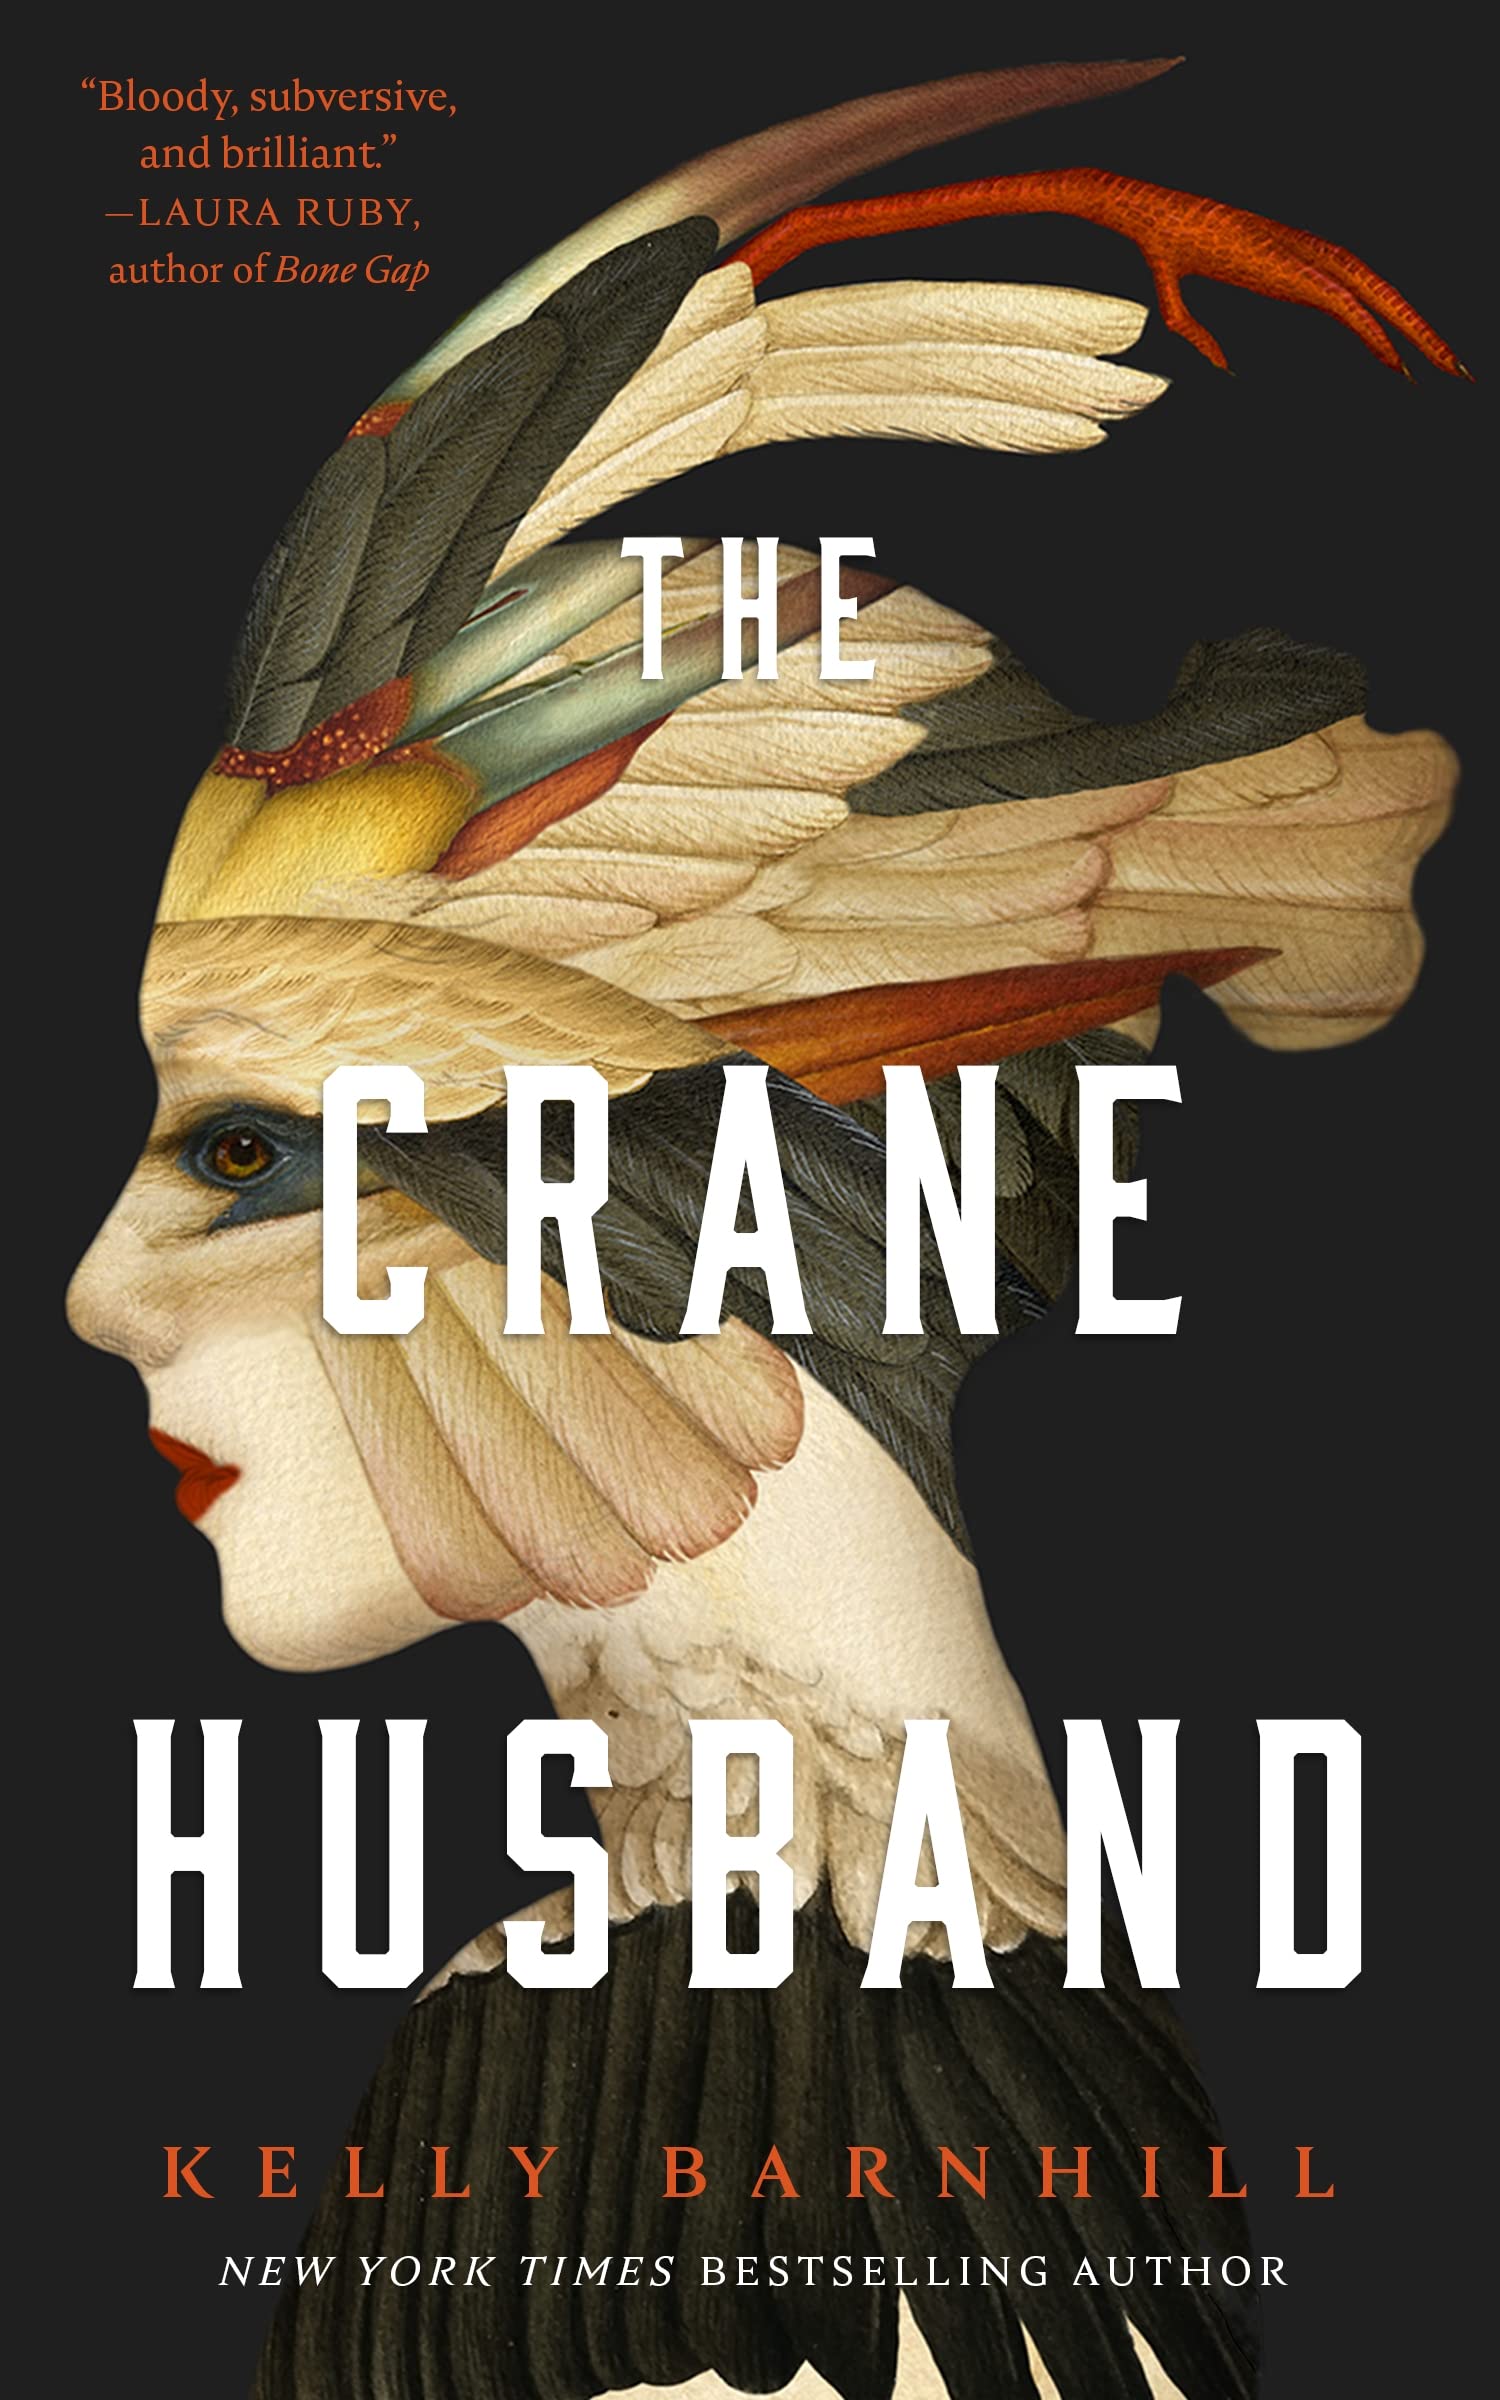 Image for "The Crane Husband"